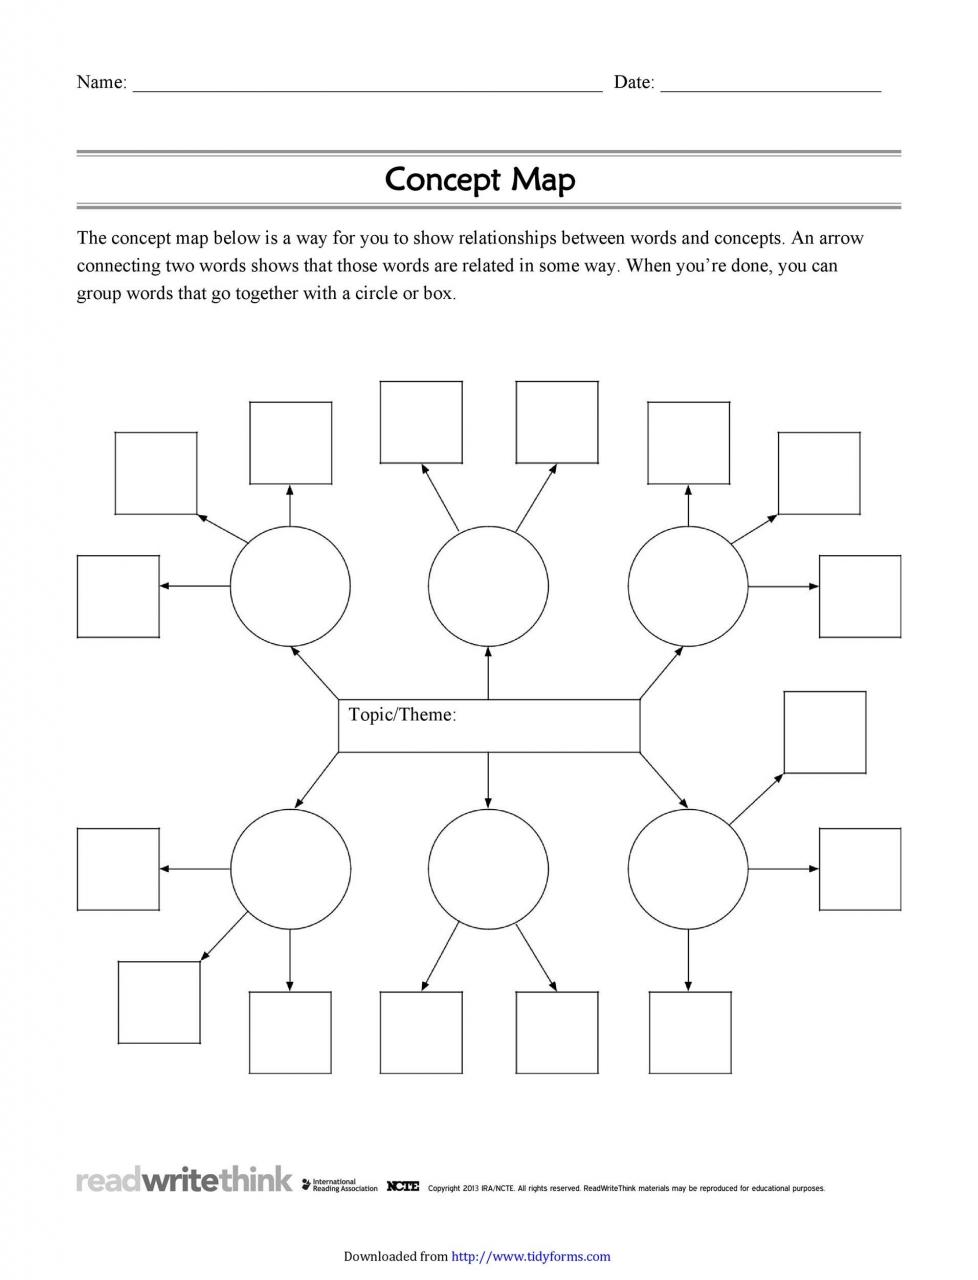 Plantilla de mapa conceptual gratis 24